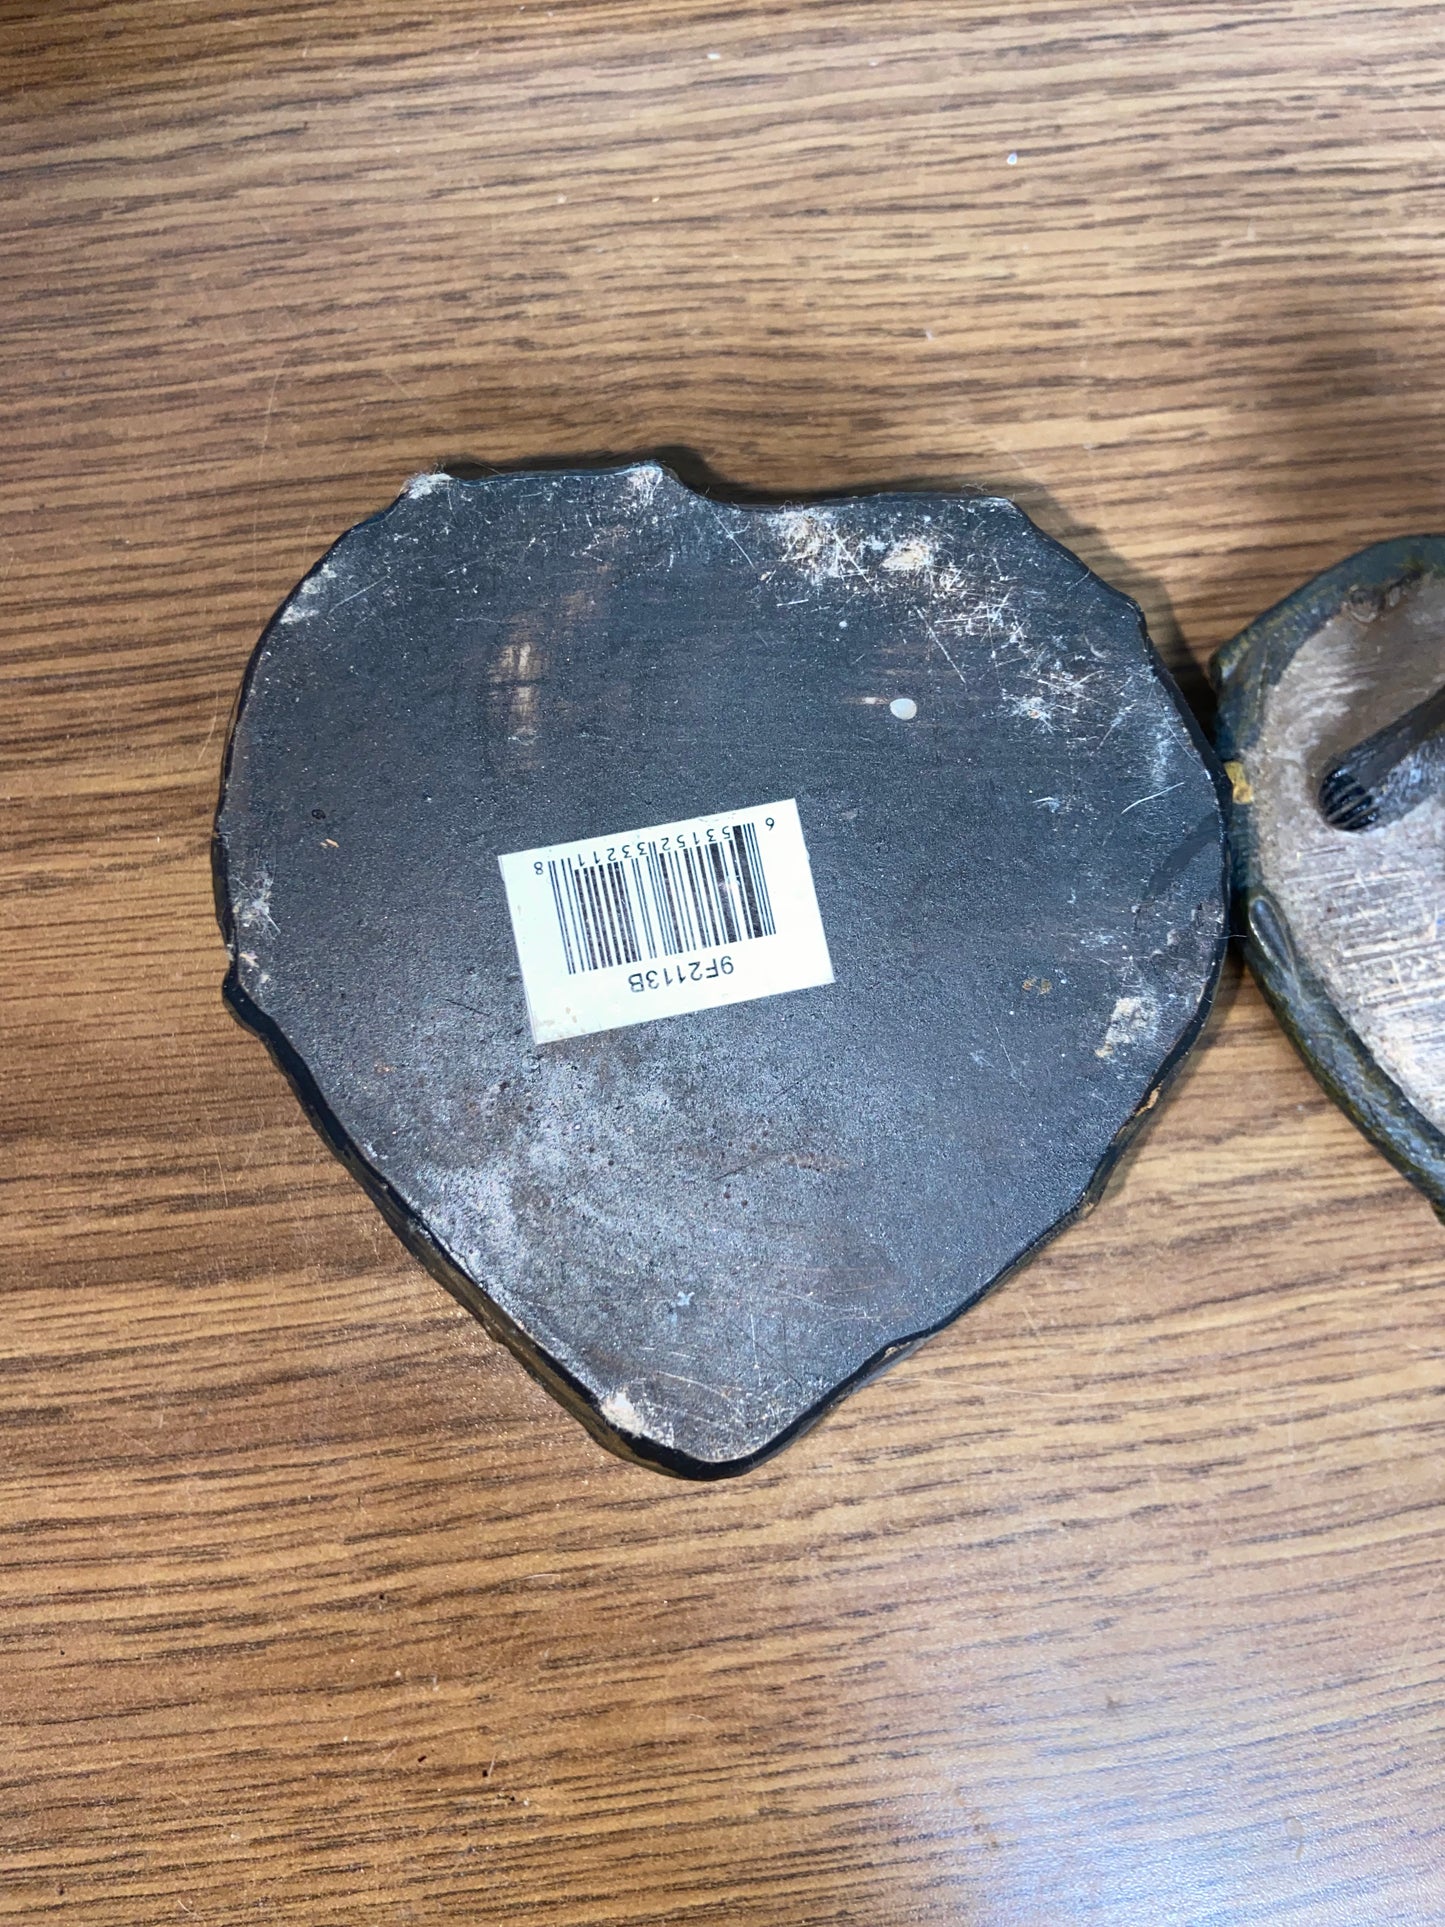 Alaska Brown Bear Heart Shaped Jewelry Box